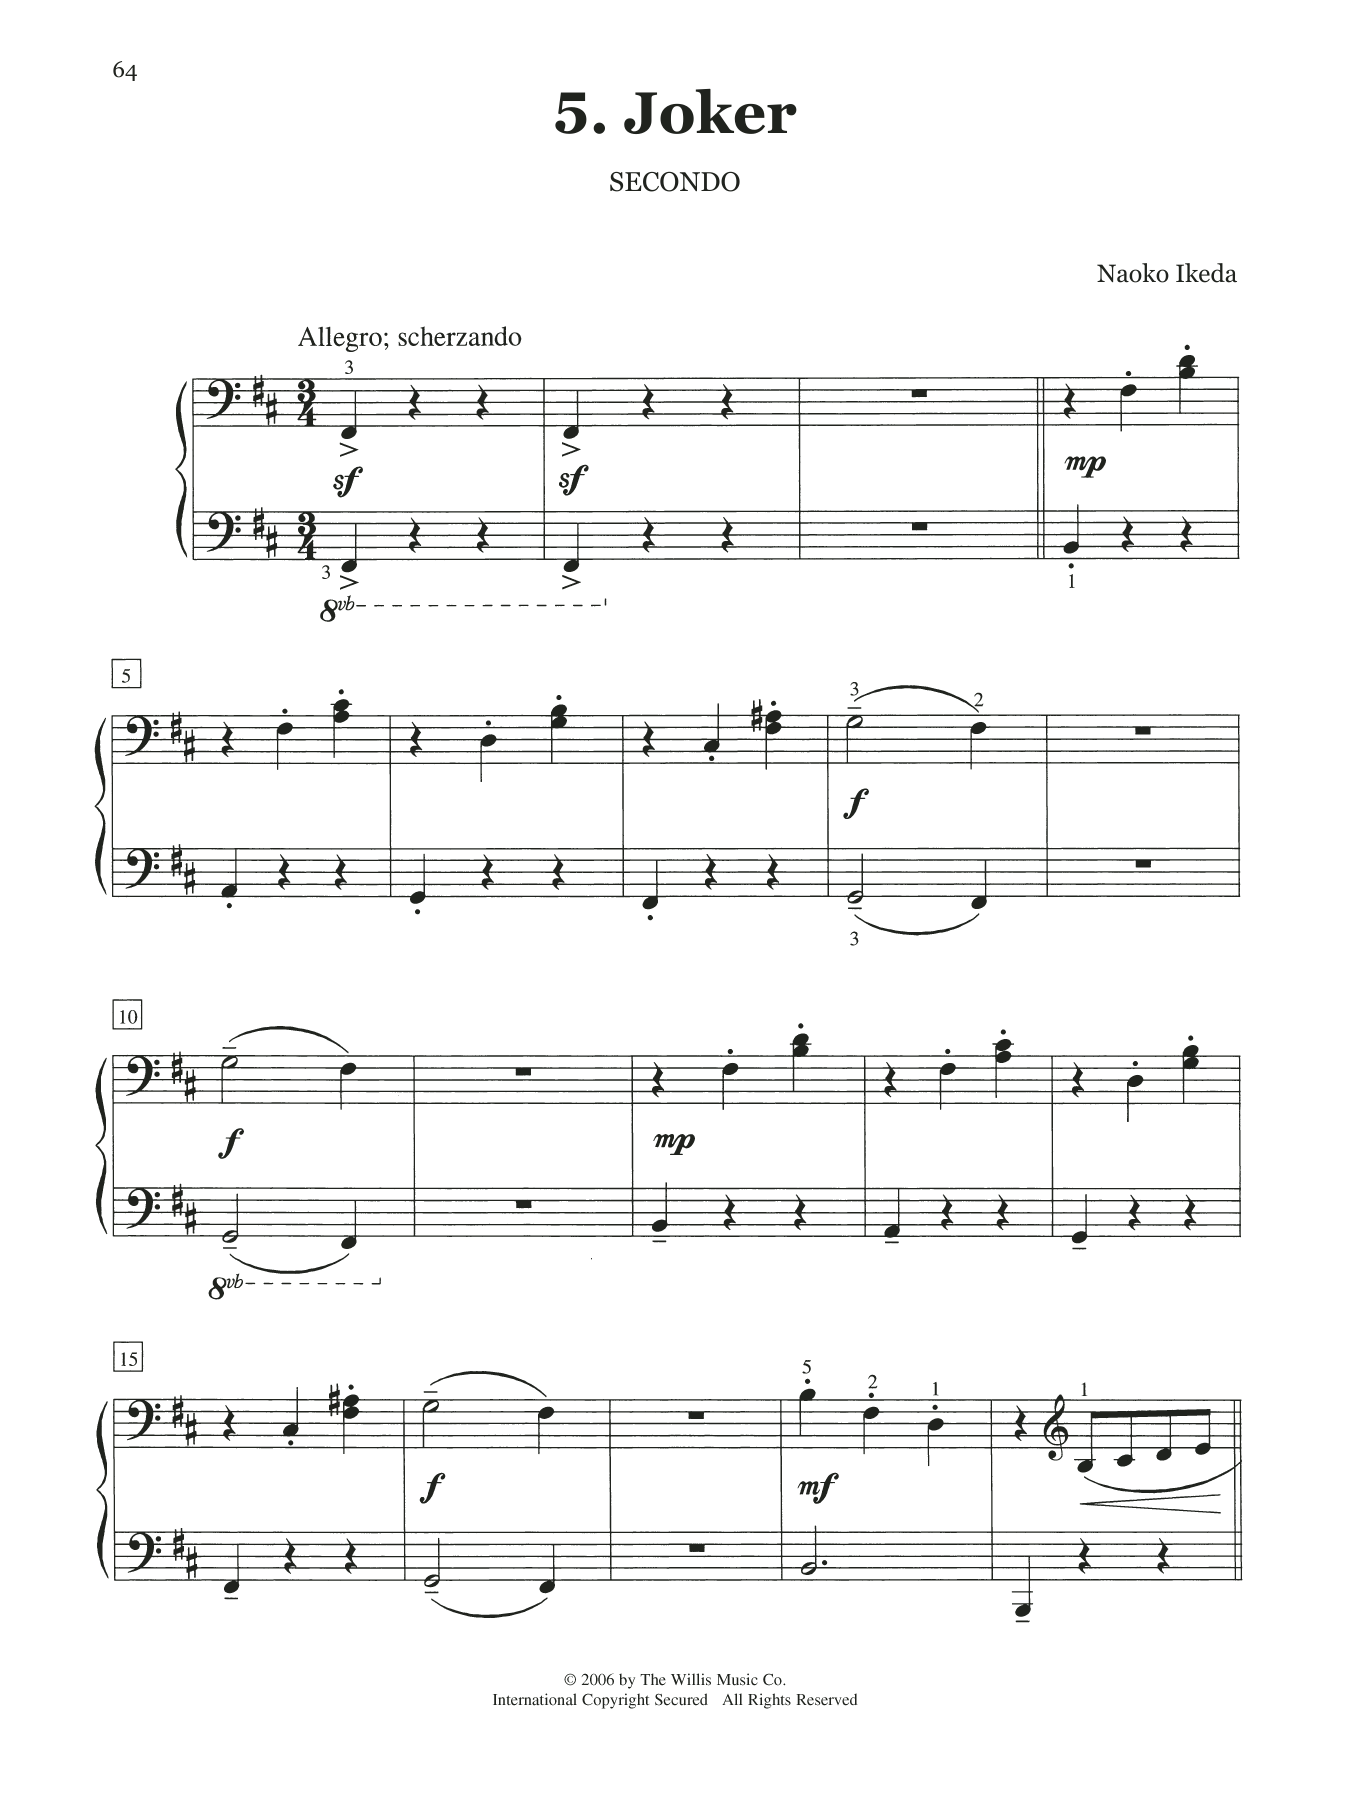 Naoko Ikeda Joker Sheet Music Notes & Chords for Piano Duet - Download or Print PDF